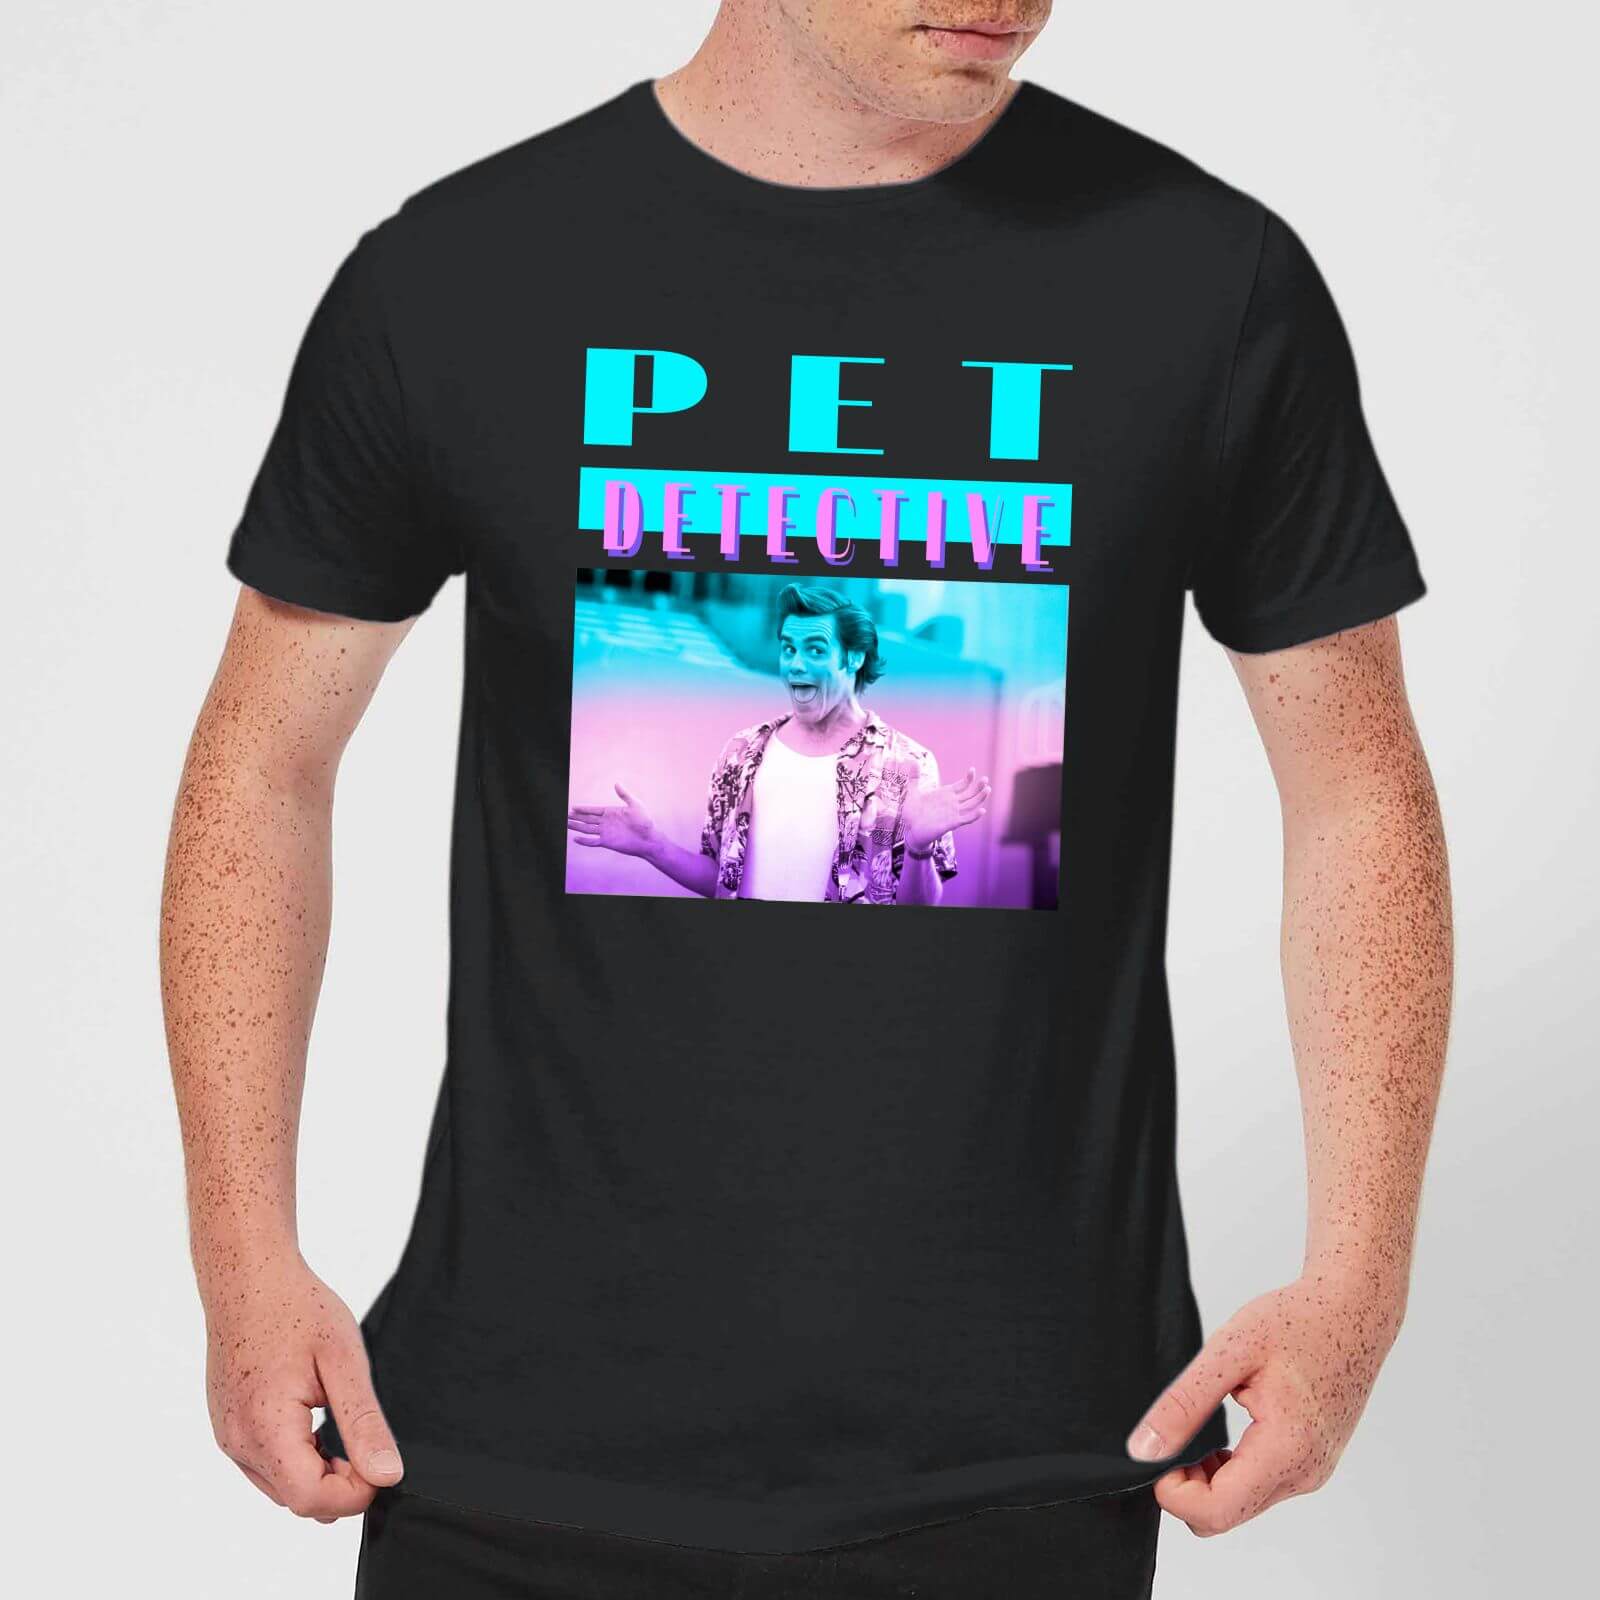 Ace Ventura Neon Men's T-Shirt - Black - 5XL